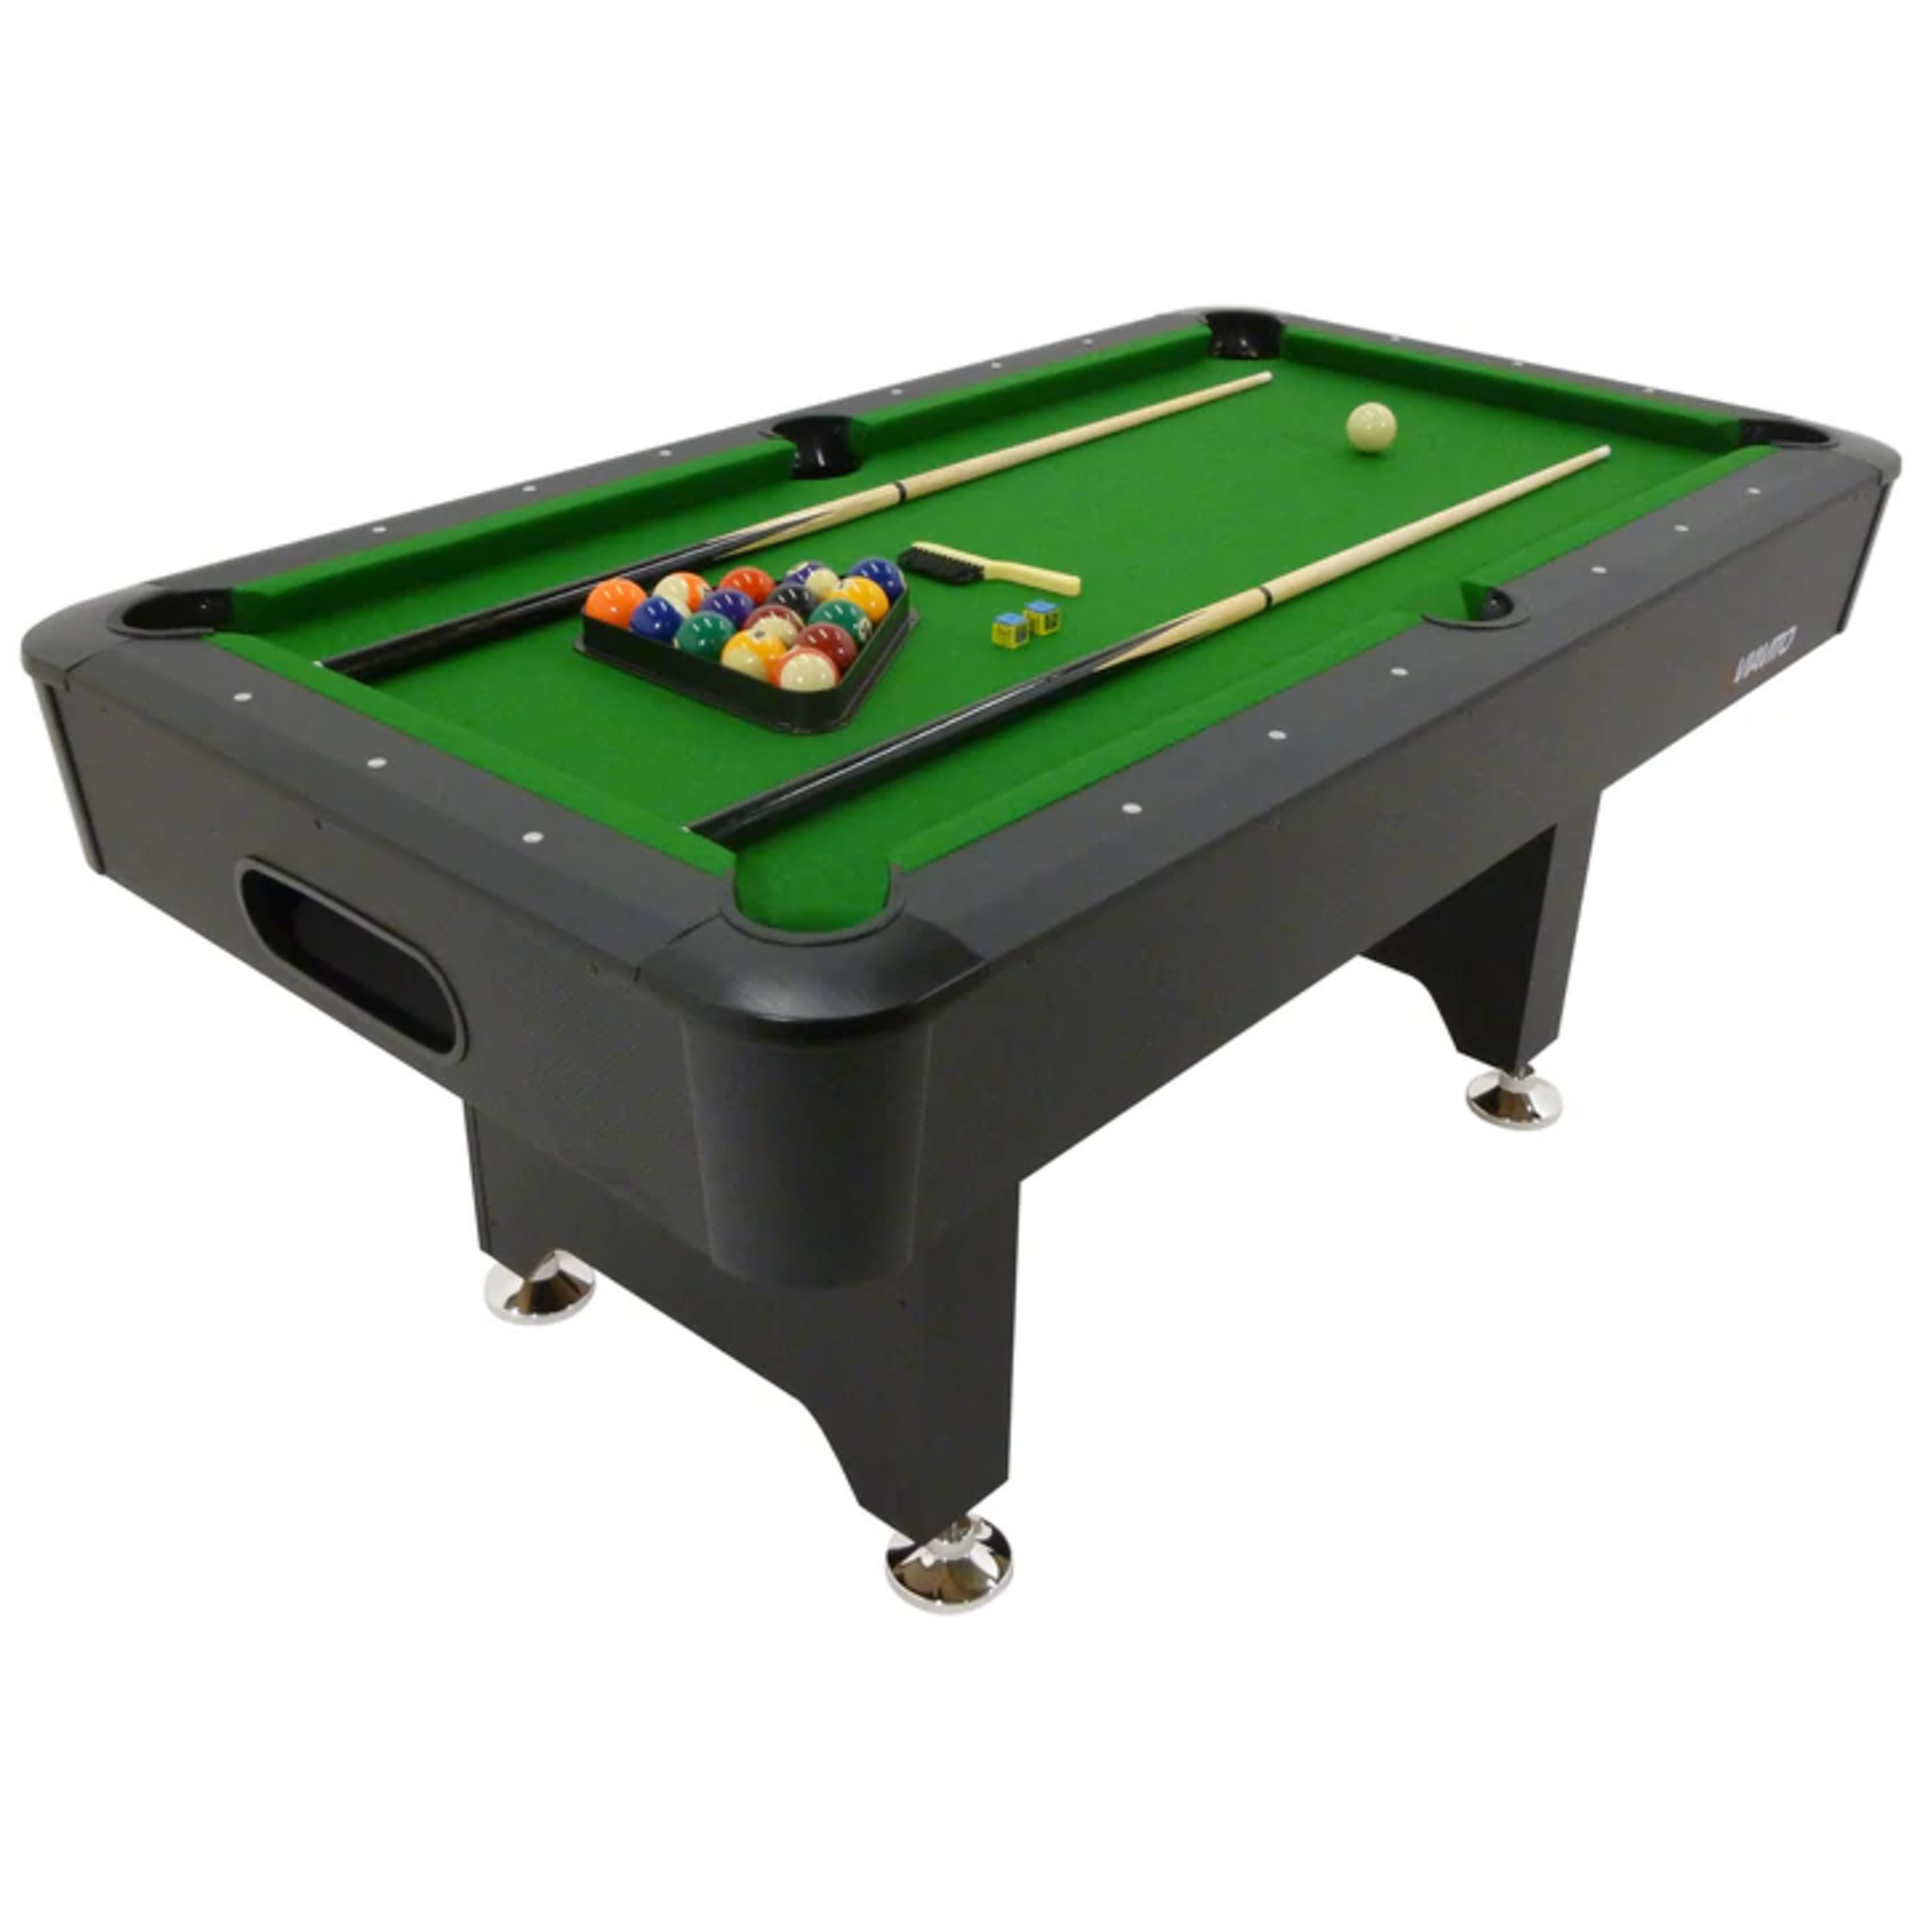 1 x Sweatband Viavito PT200 6ft Pool Table BLACK WITH GREEN CLOTH SURFACE RRP £479.00 SKU SWE-APG-